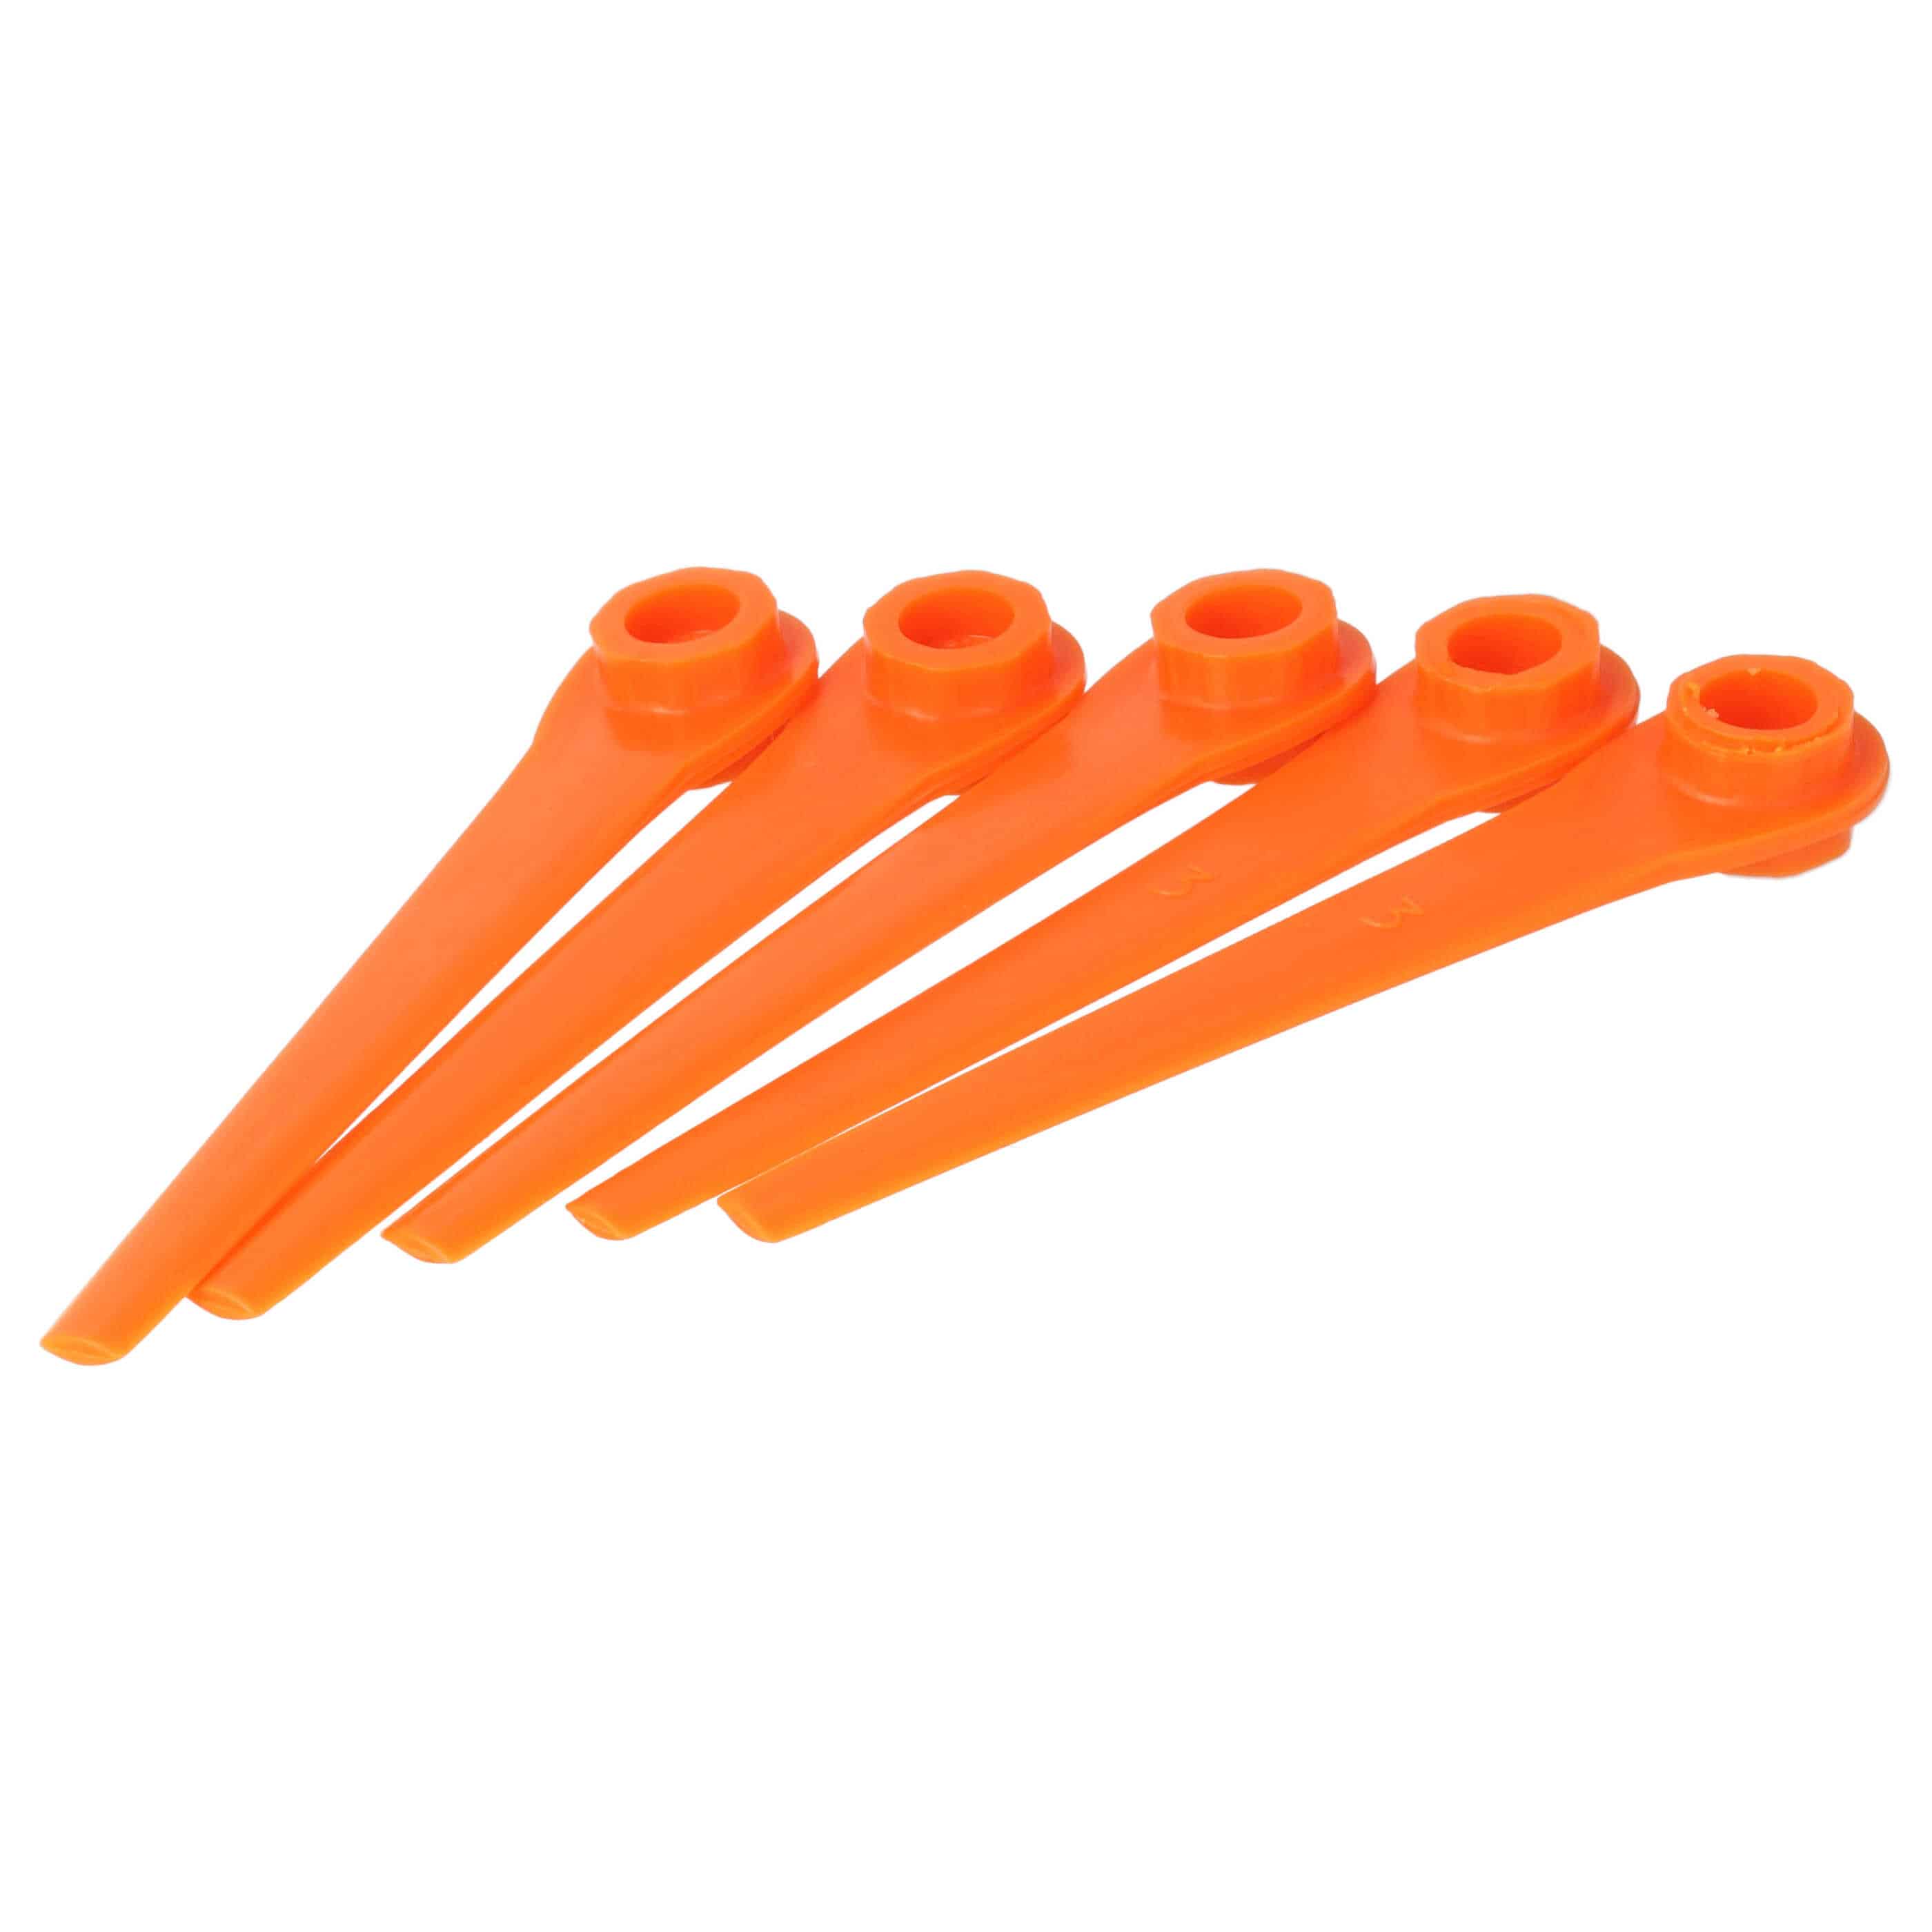 10x Lama sostituisce Gardena RotorCut 5368-20 per tagliaerba - arancione, plastica